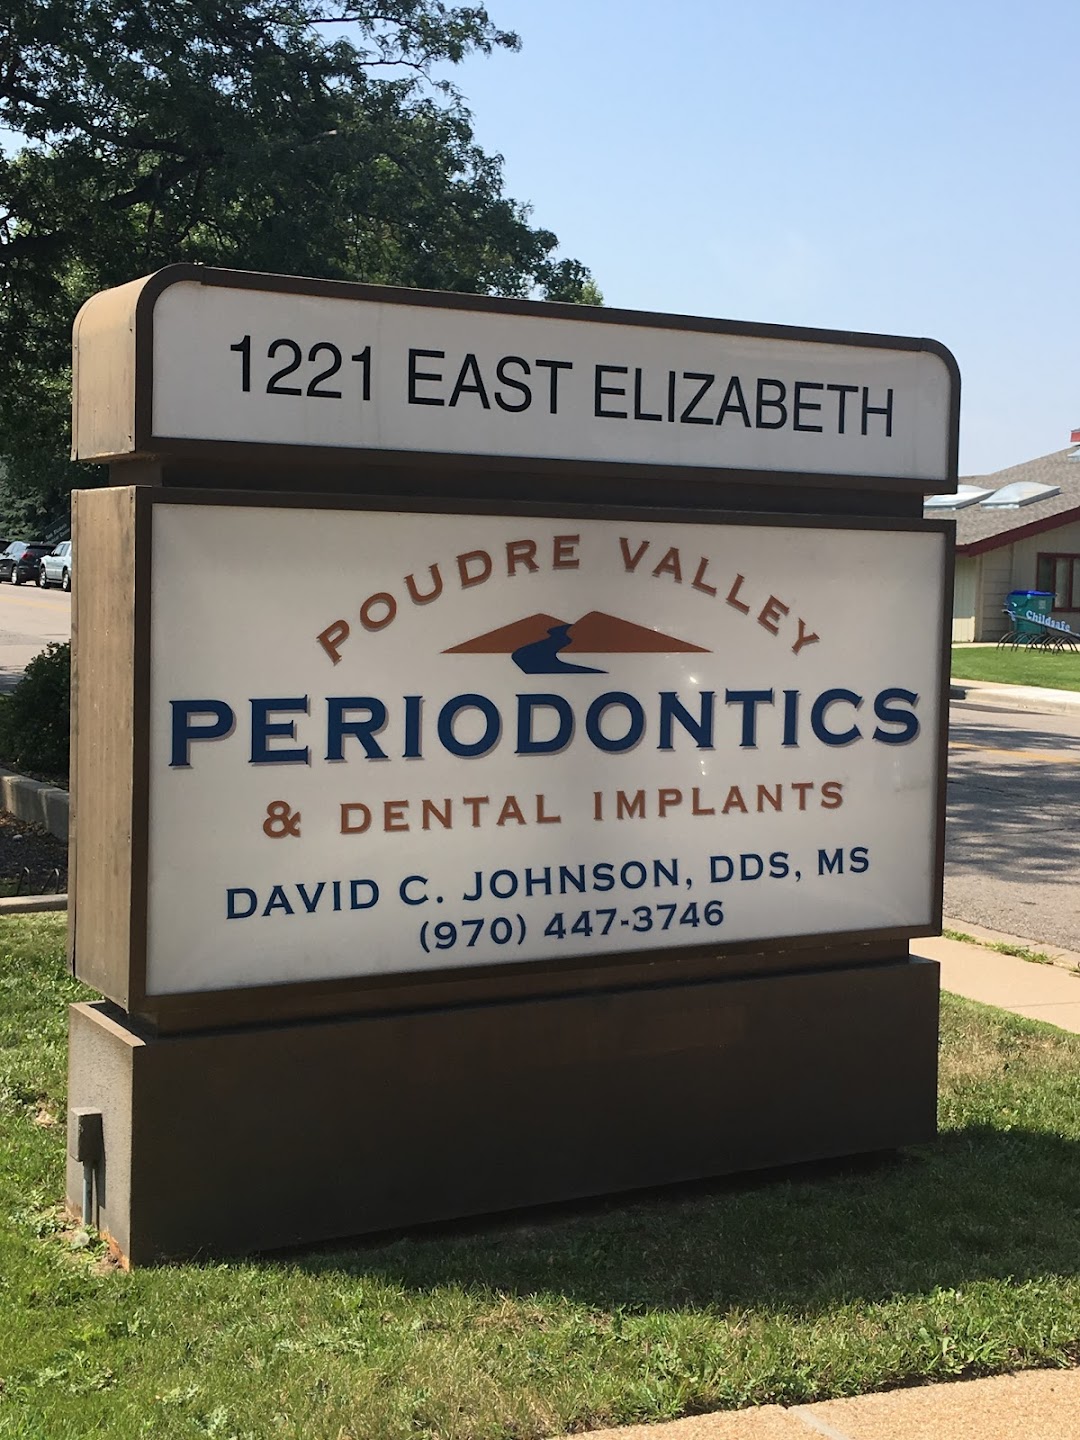 Poudre Valley Periodontics & Dental Implants. David C Johnson DDS